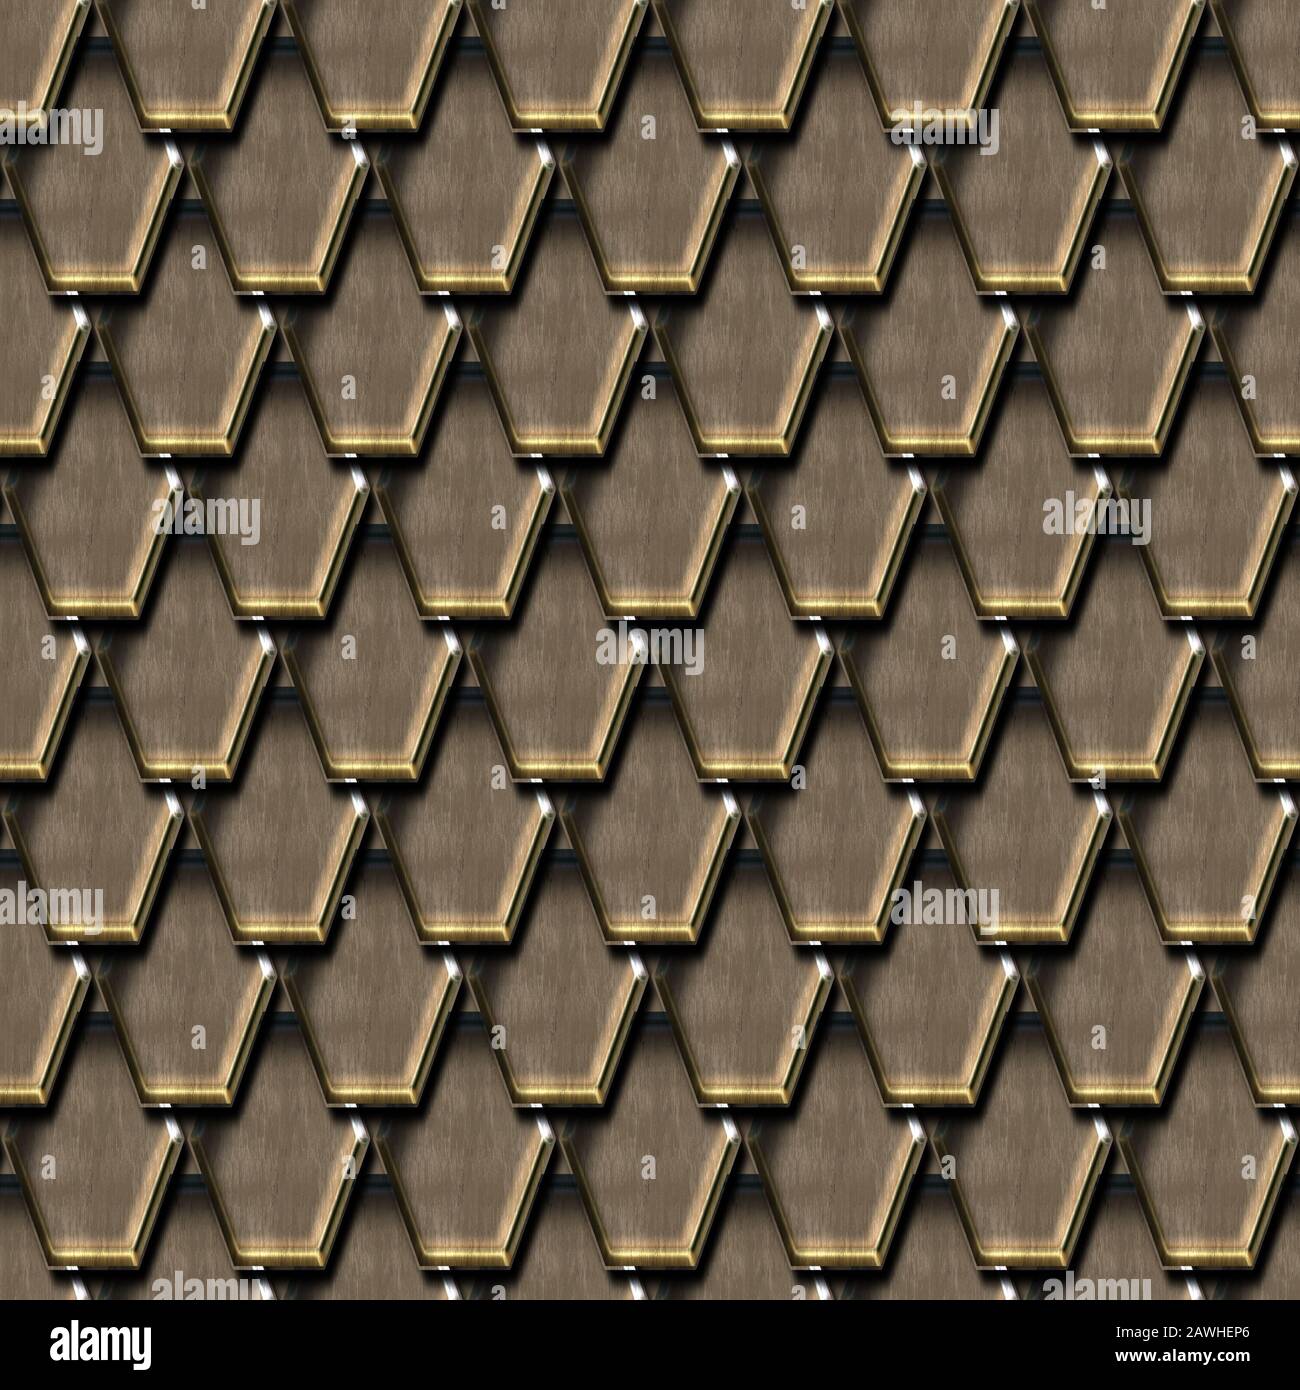 Armor seamless texture background Stock Photo - Alamy